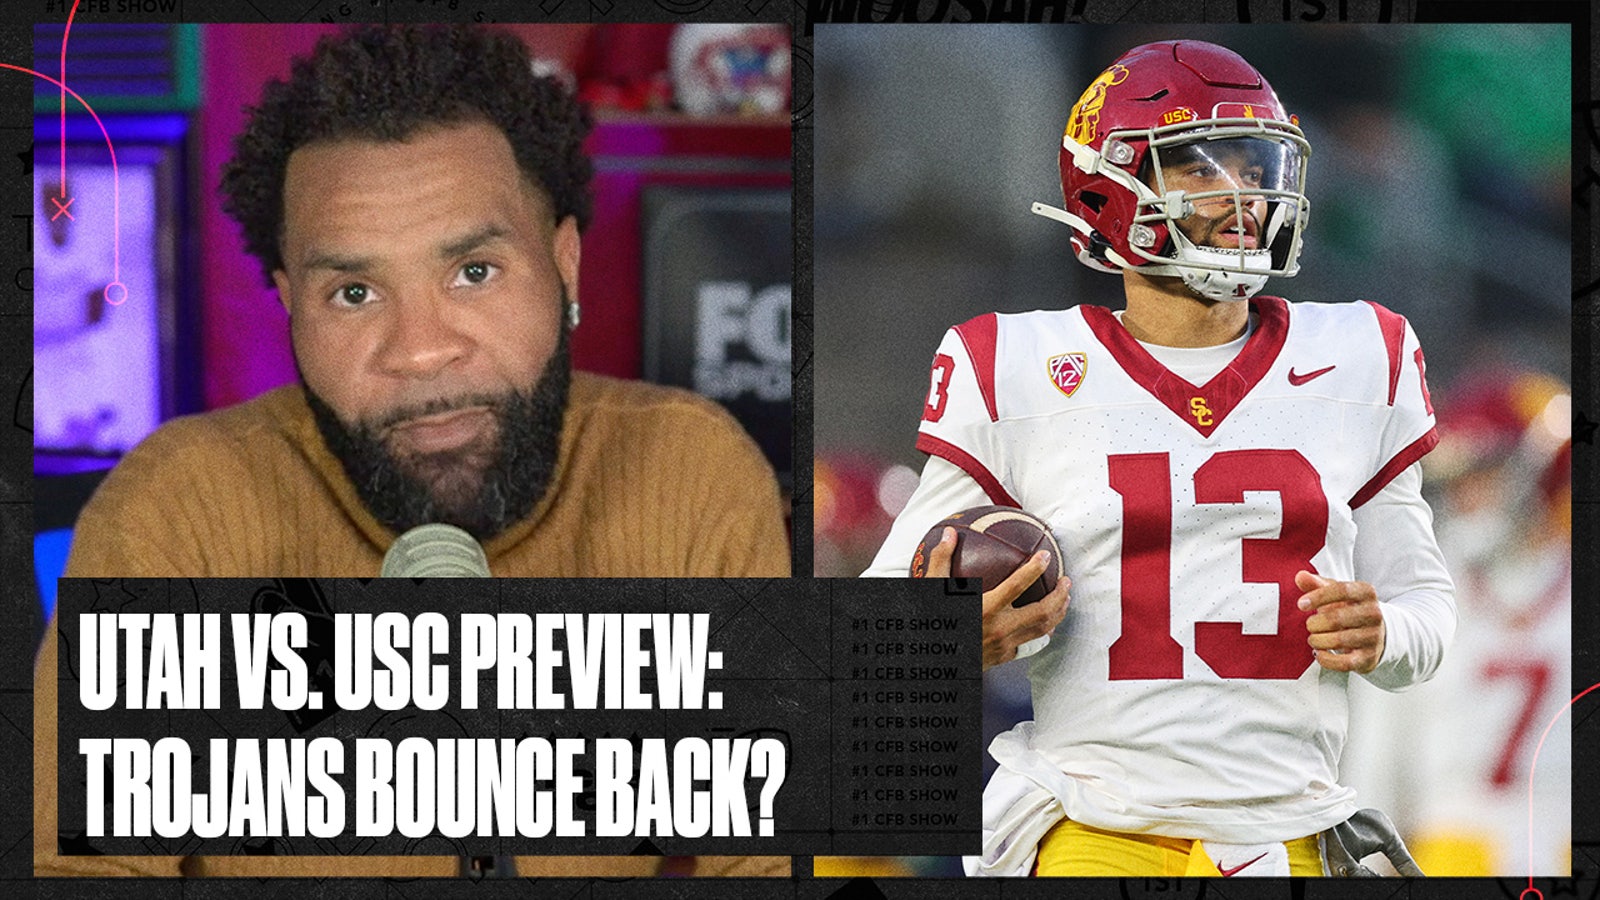 USC vs. Utah preview: The Trojans MUST bounce back